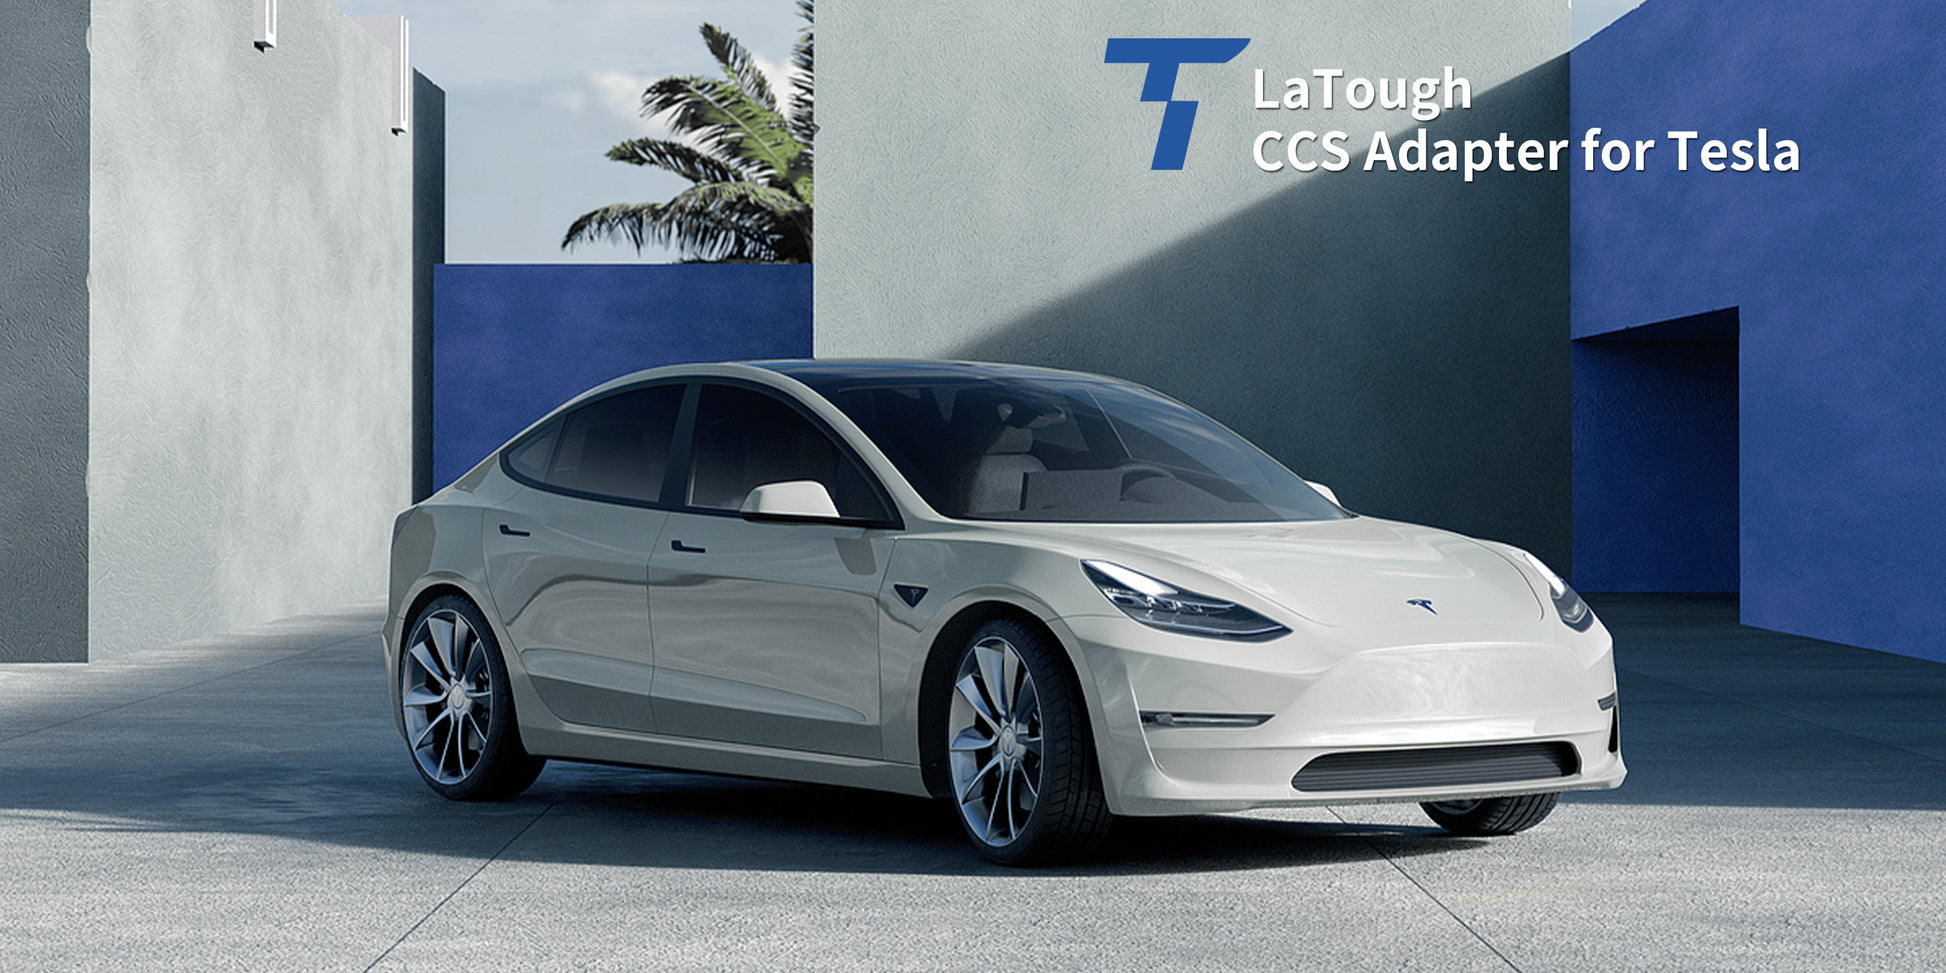 Daolar CCS to Tesla Adapter DC Fast Charging Adapter for Tesla Model 3 –  Daolar-EV